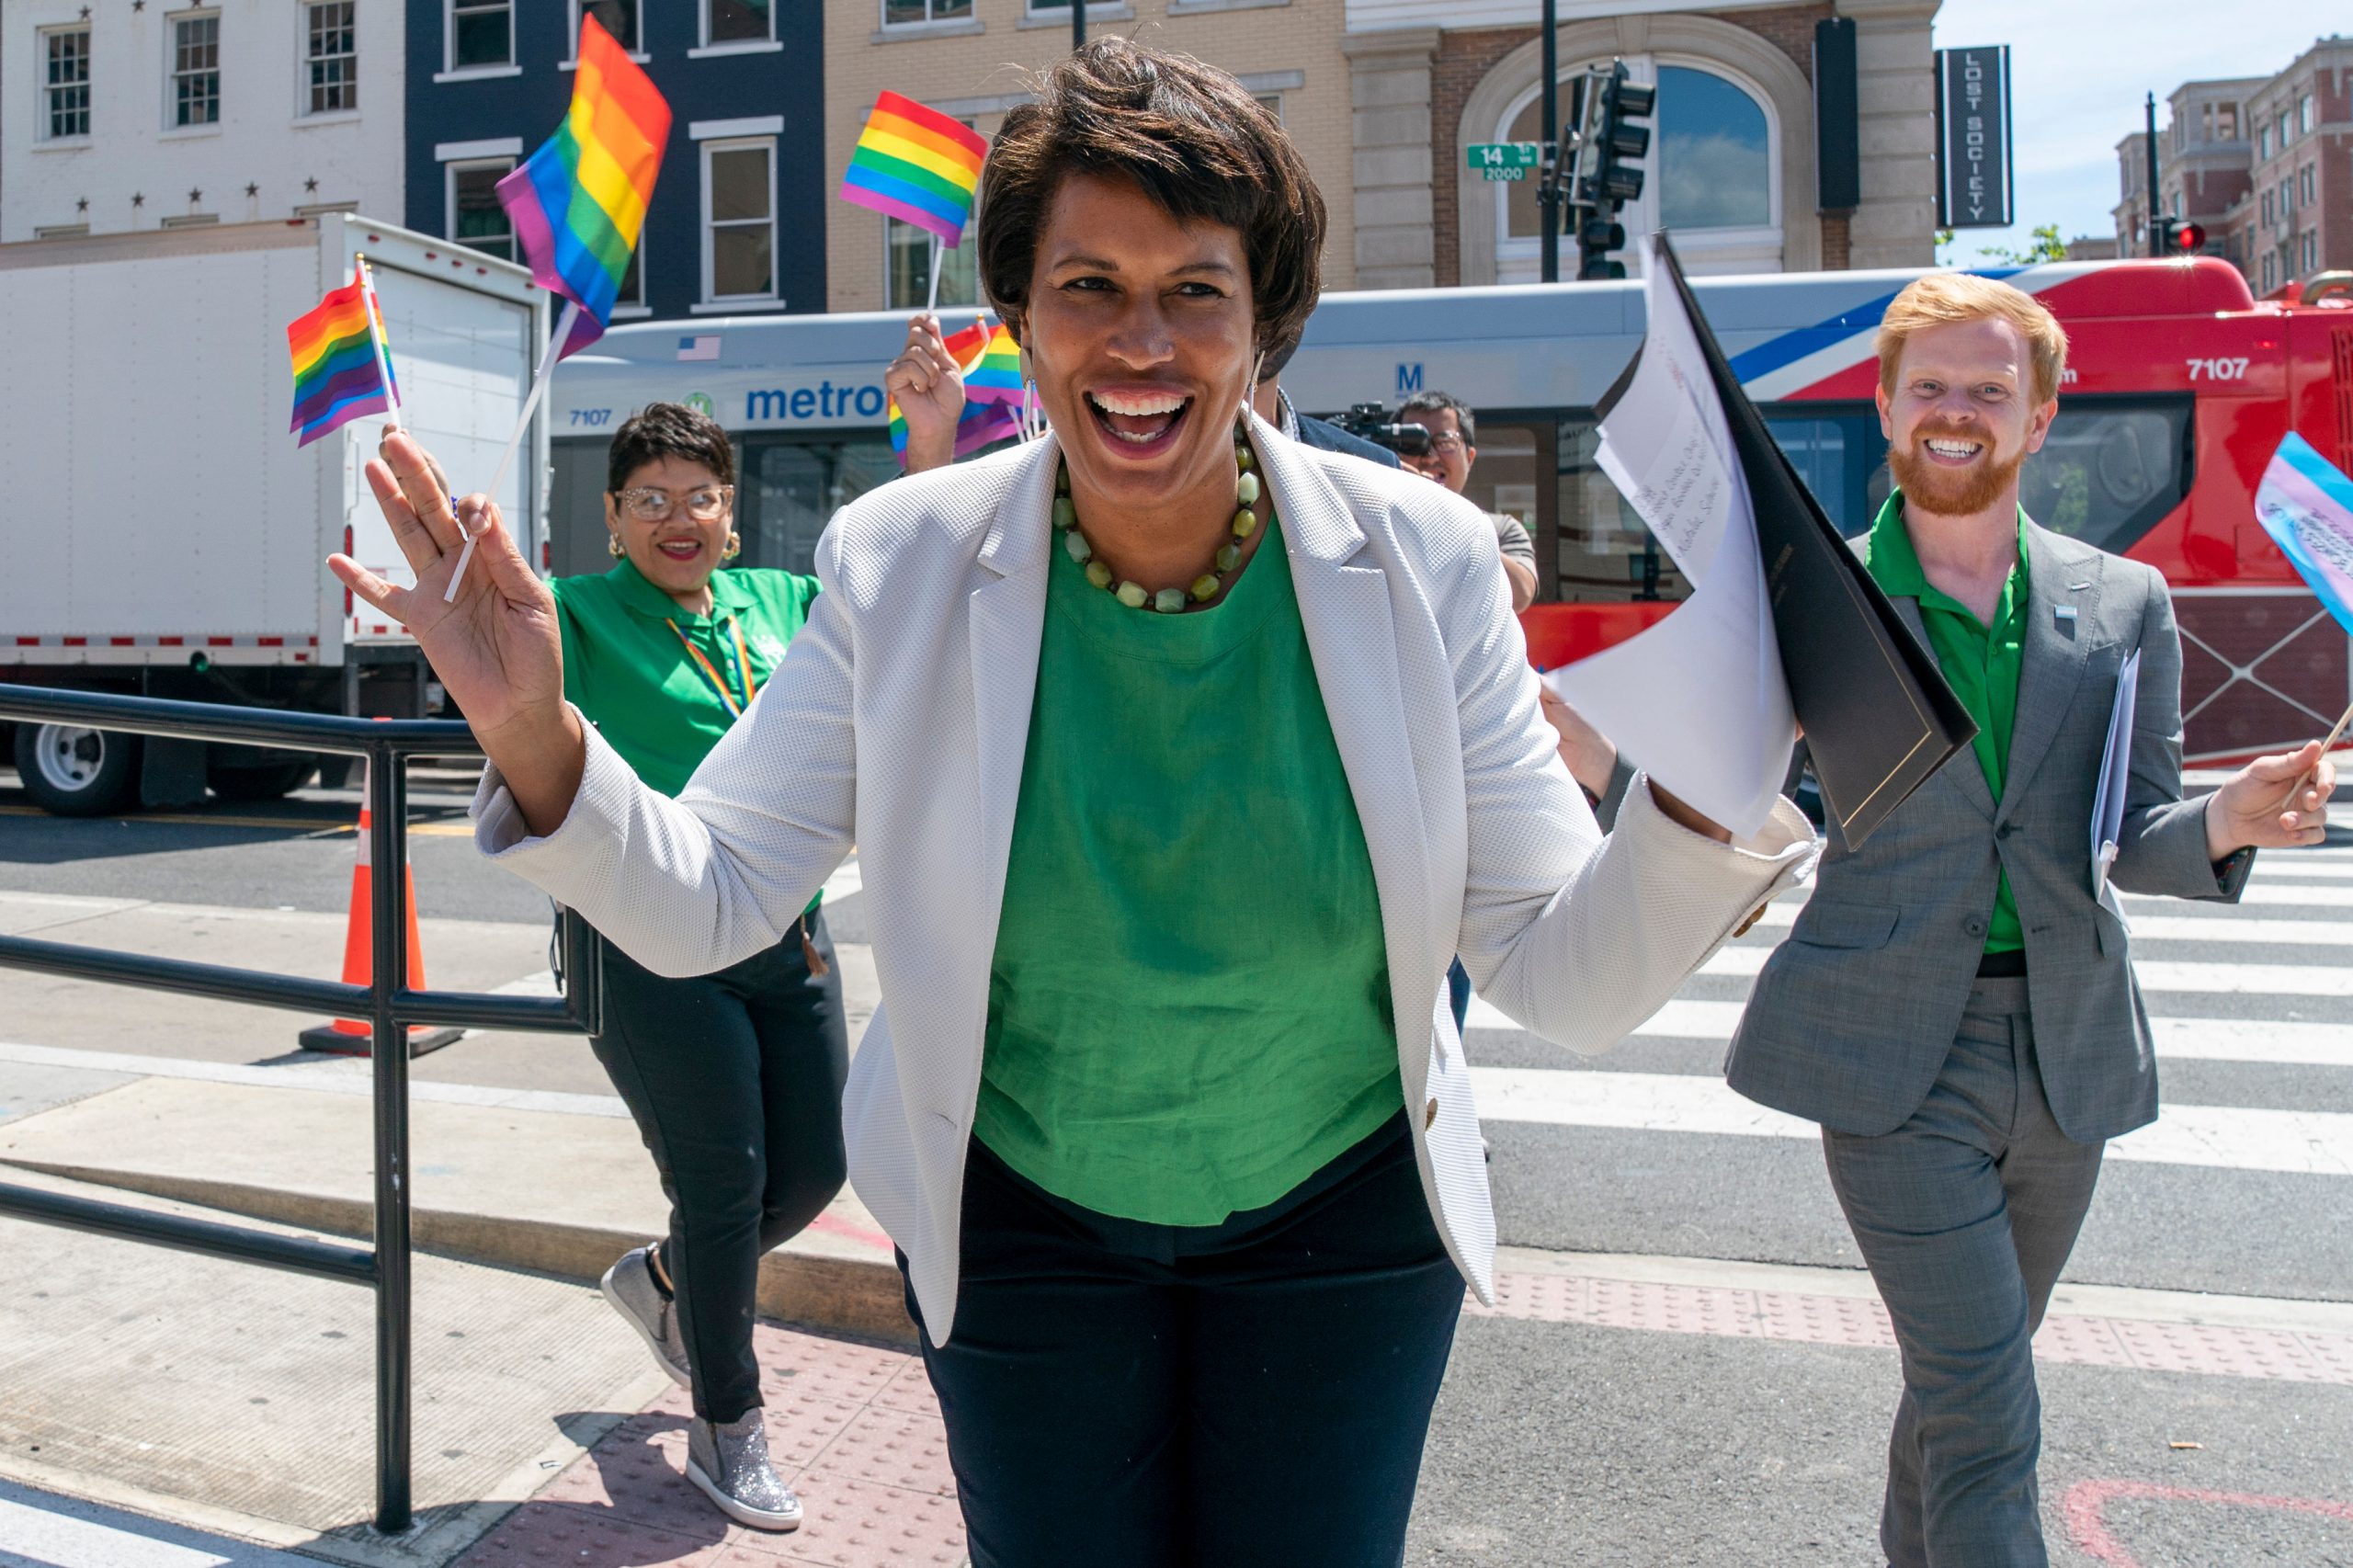 Muriel Bowser wins Democratic primary for Washington DC mayor